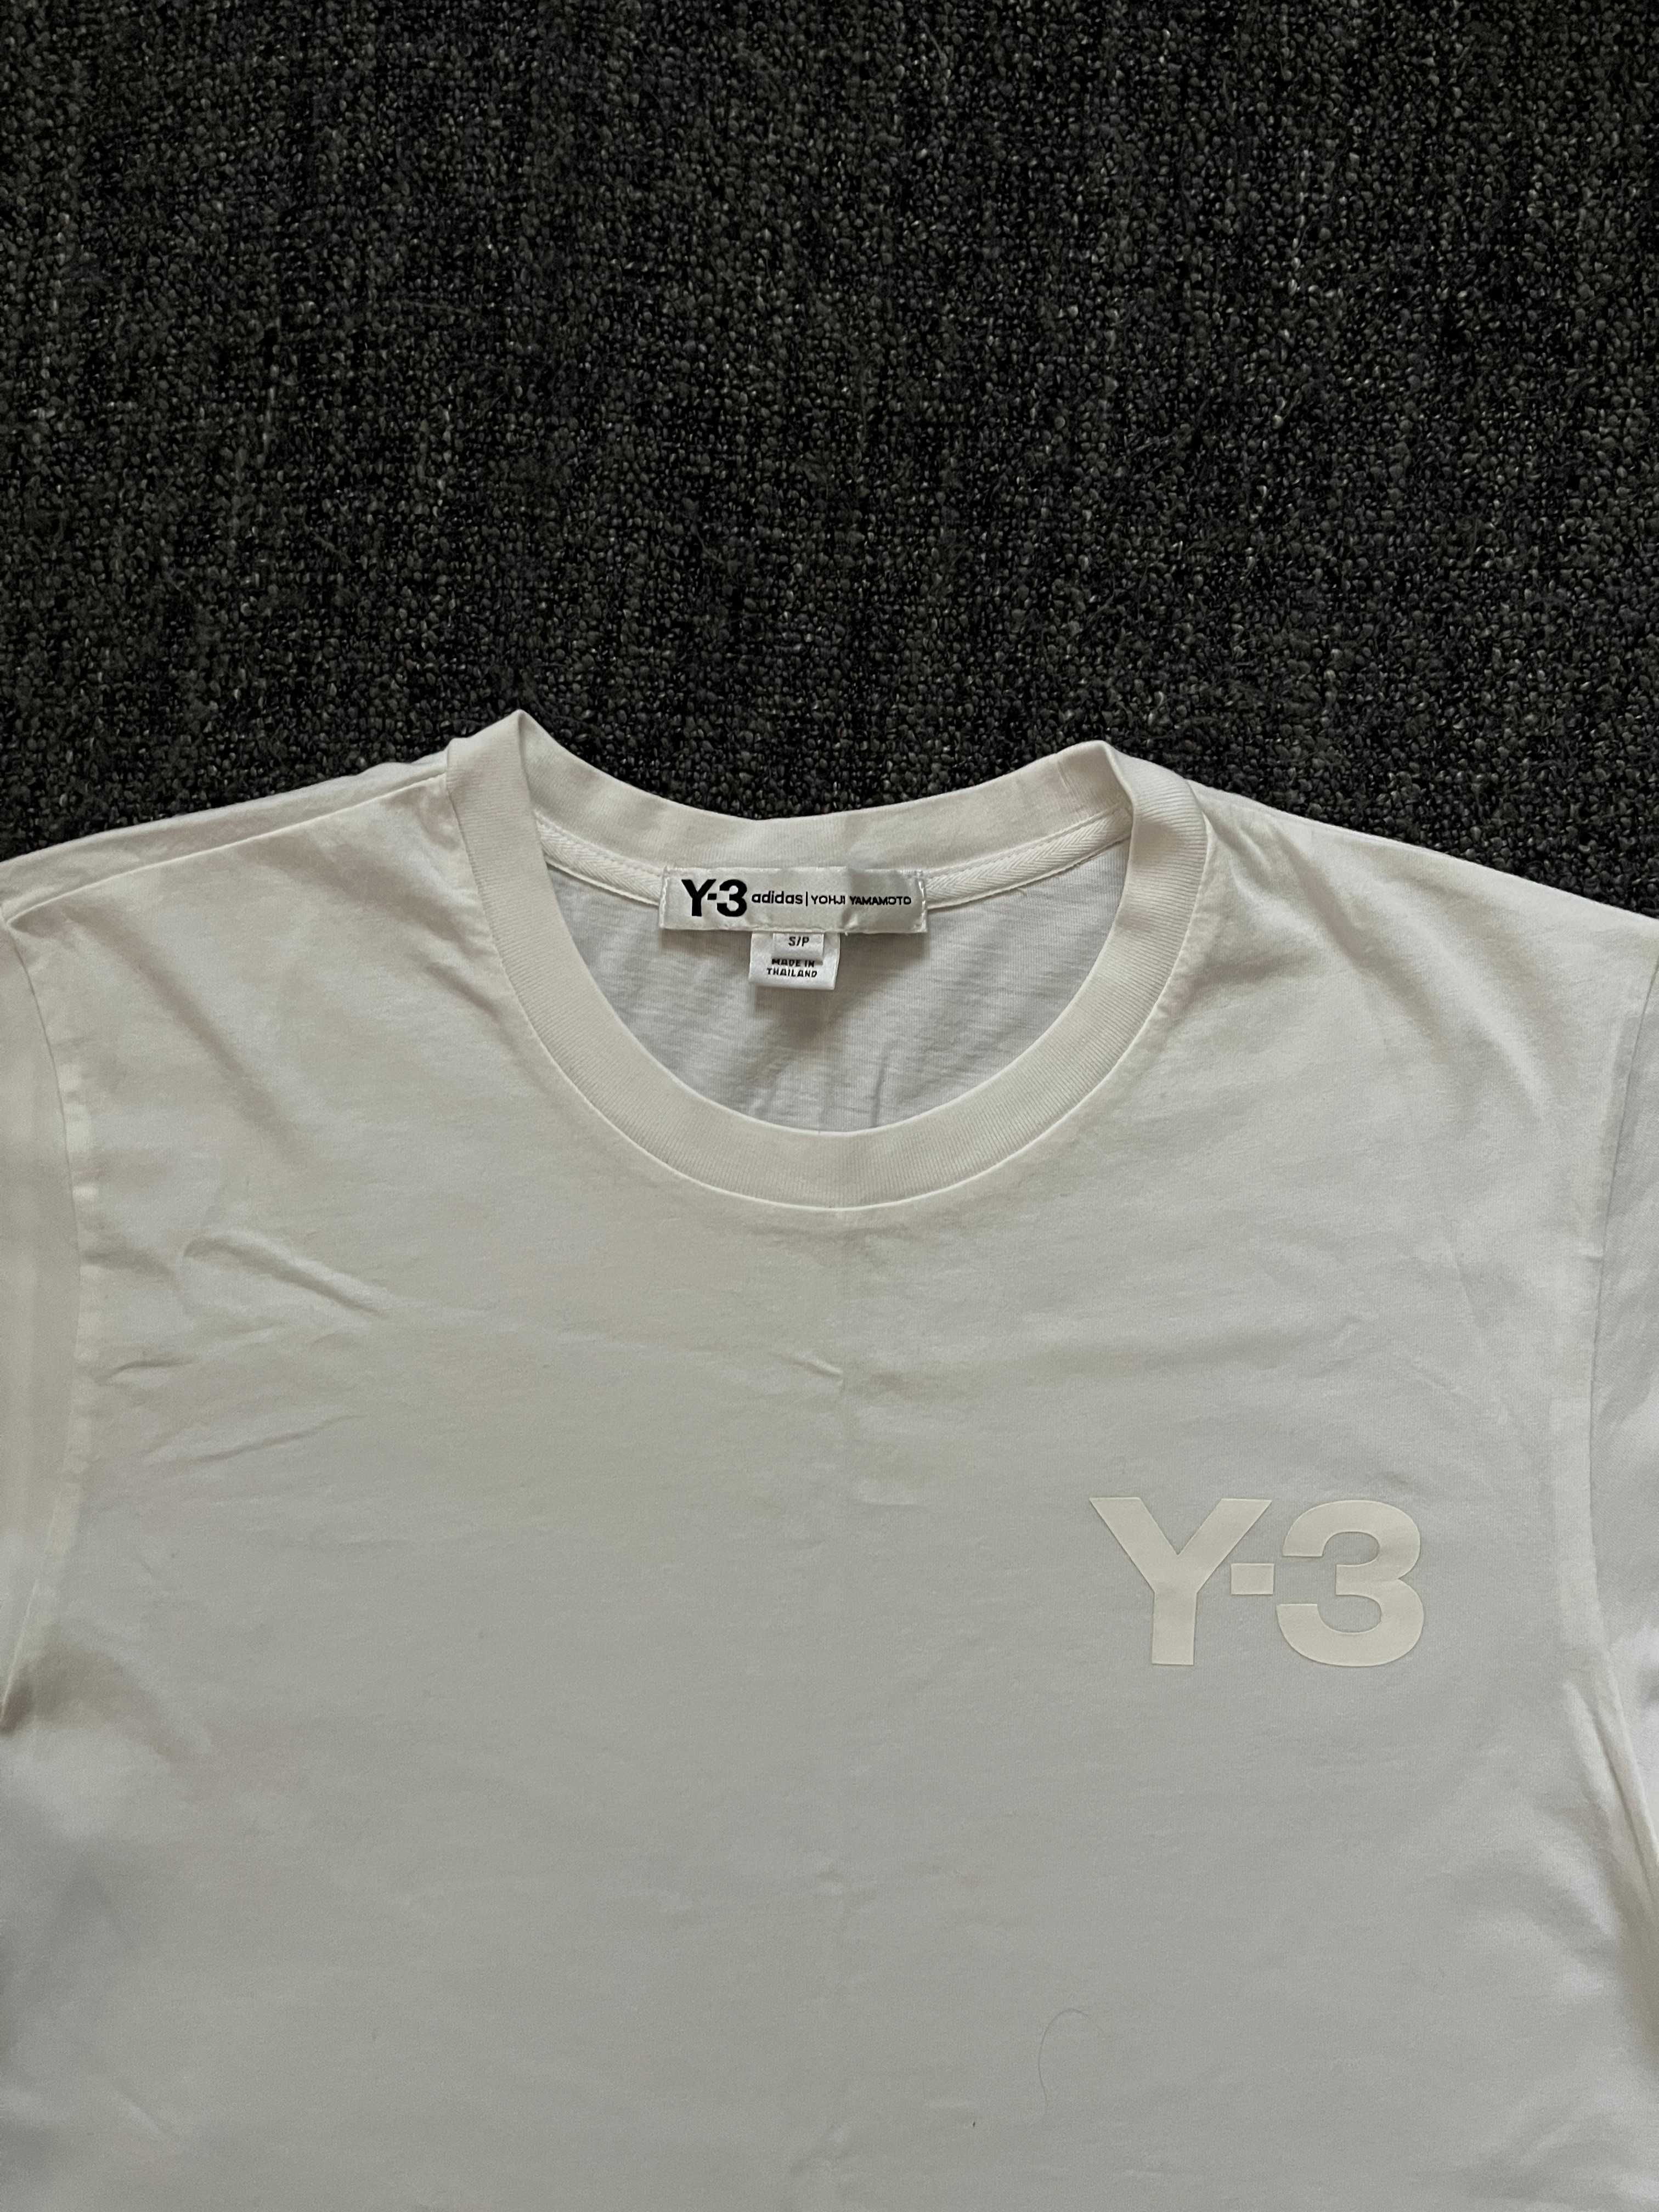 Adidas Y-3 Yohji Yamamoto S T-shirt biały koszulka streetwear